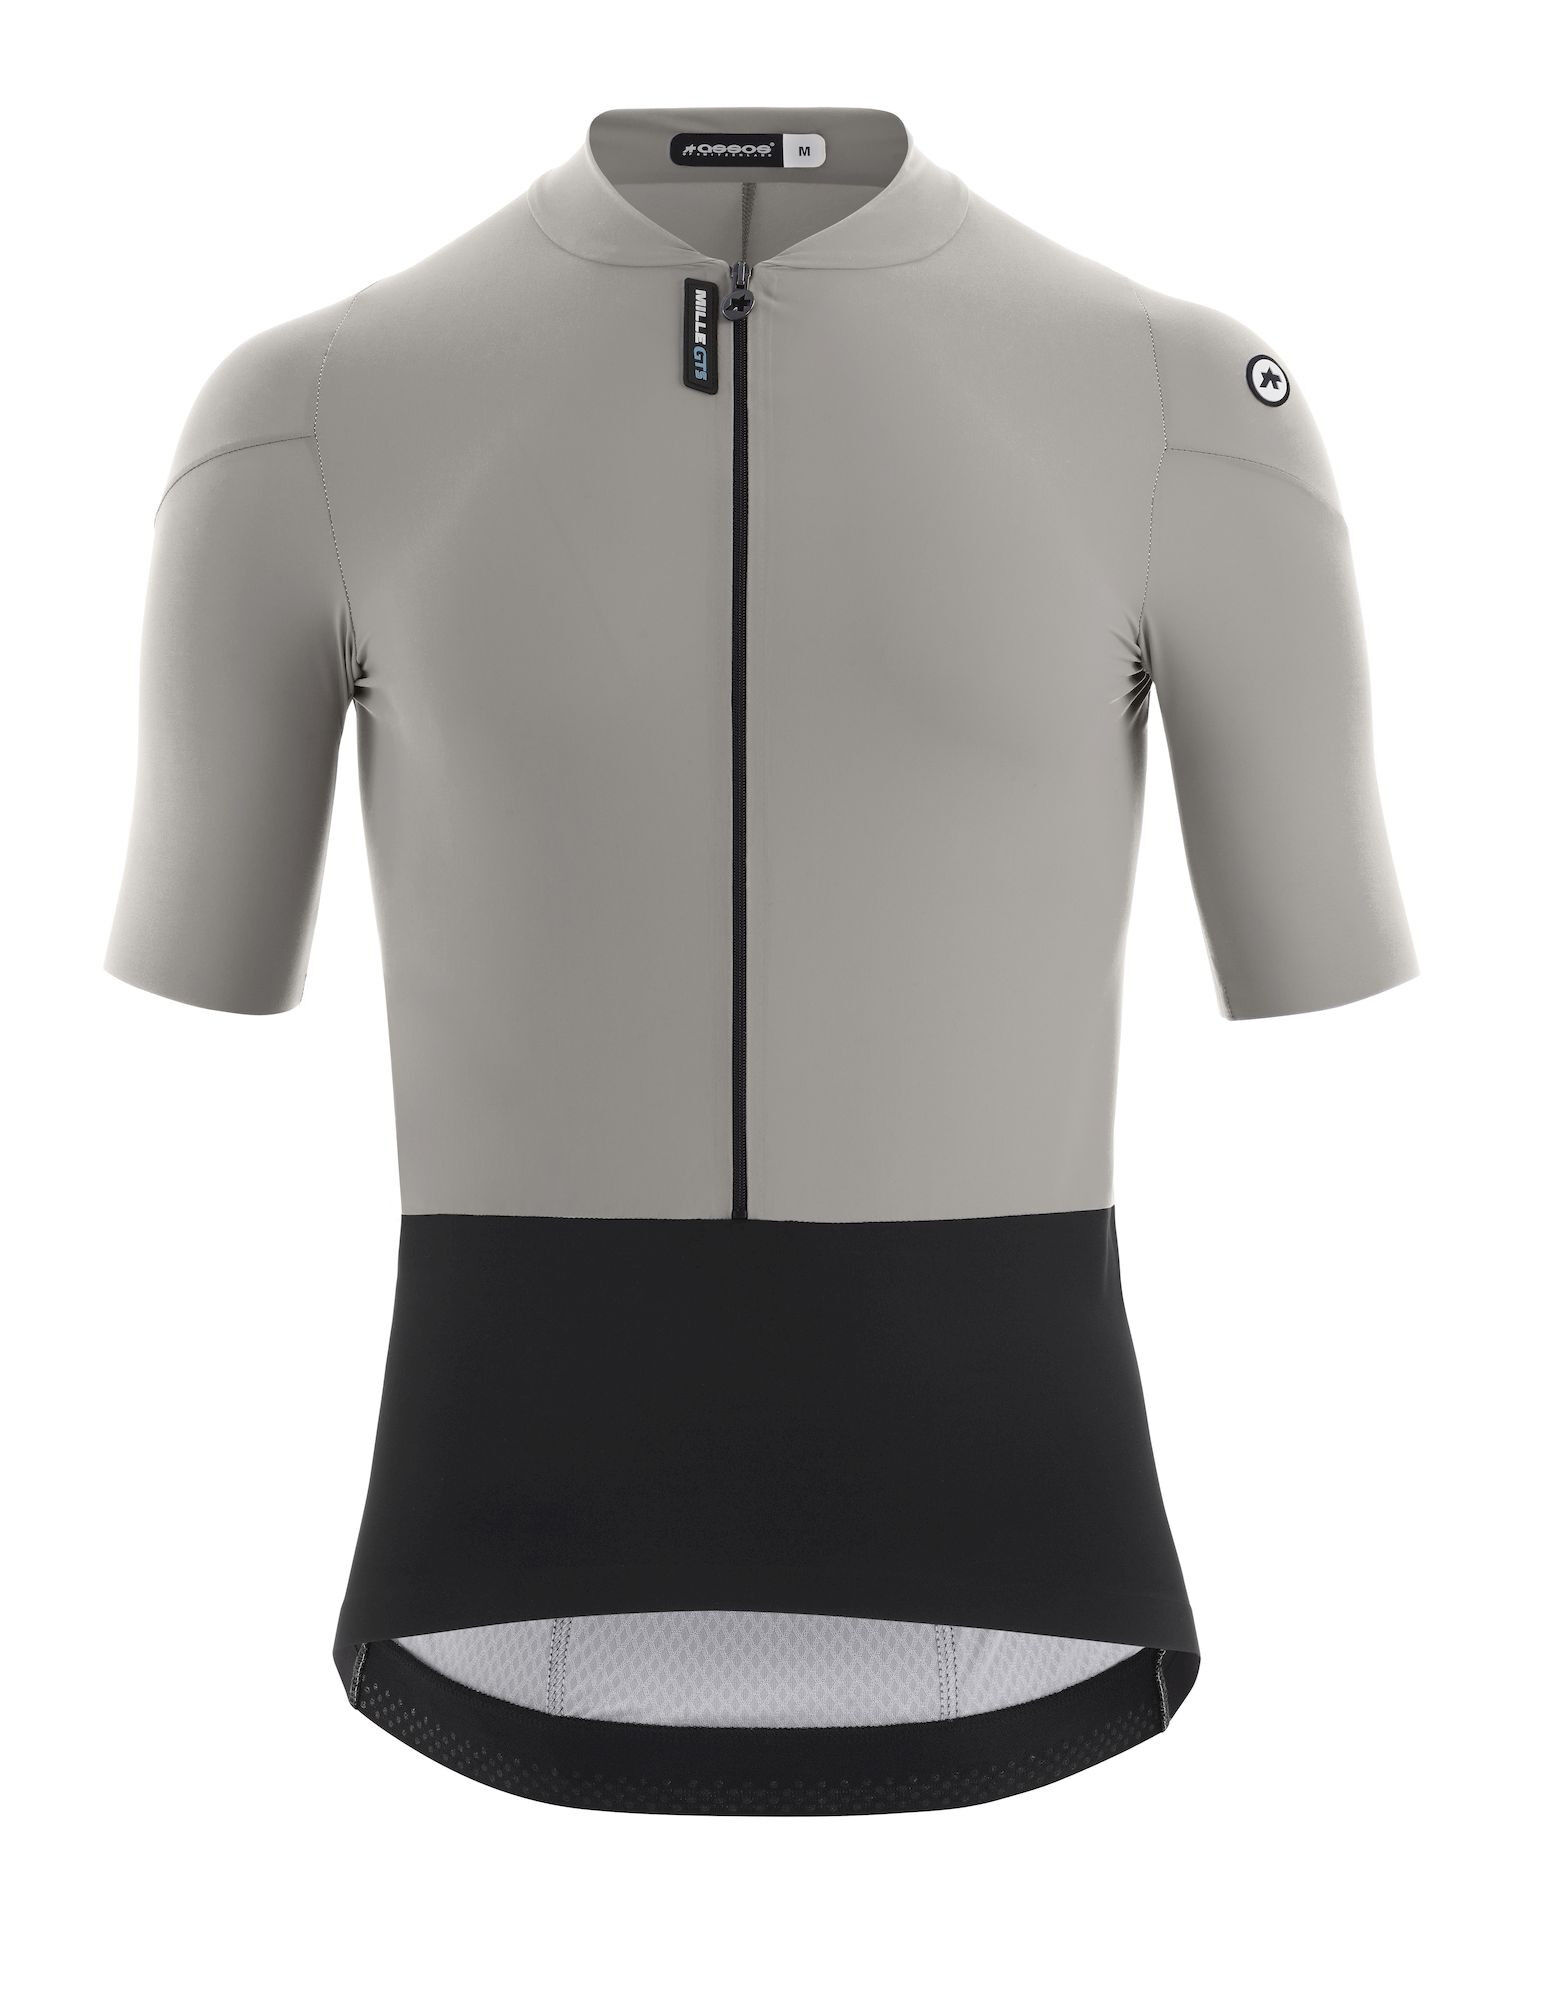 Assos Mille GTS Jersey C2 - Cycling jersey - Men's | Hardloop